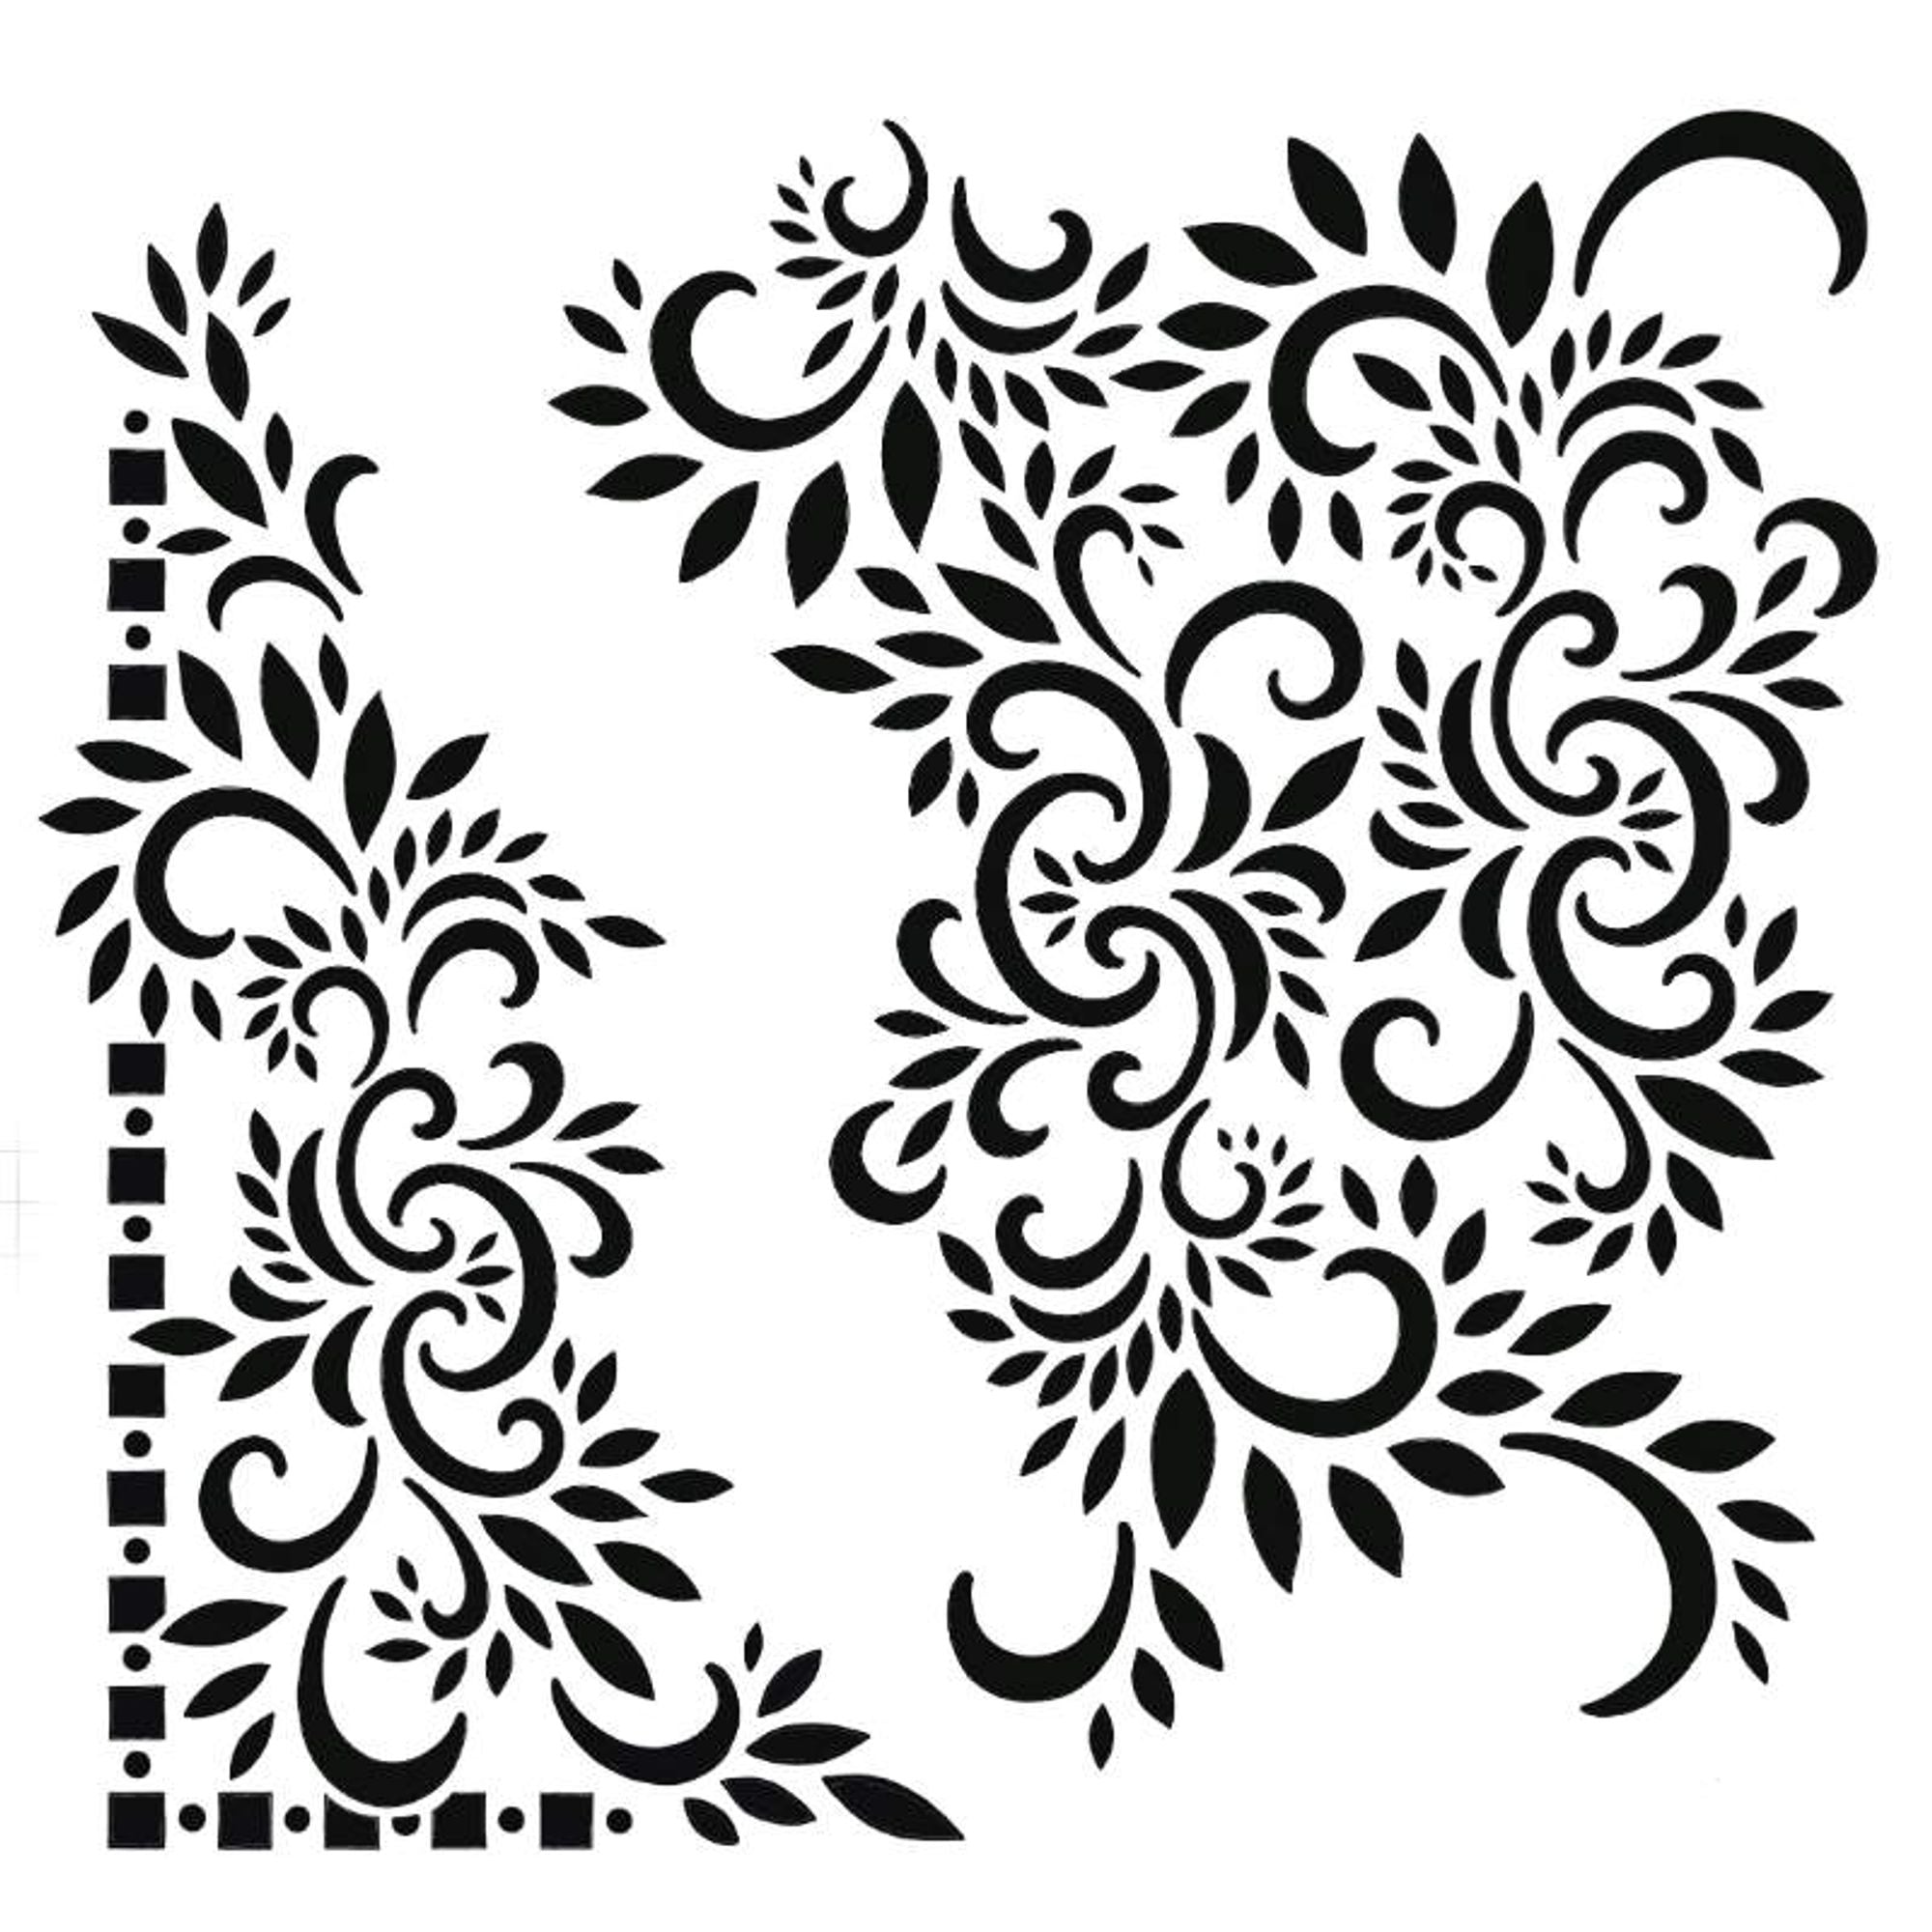 Creative Expressions Henna Petals 7 in x 7 in Stencil